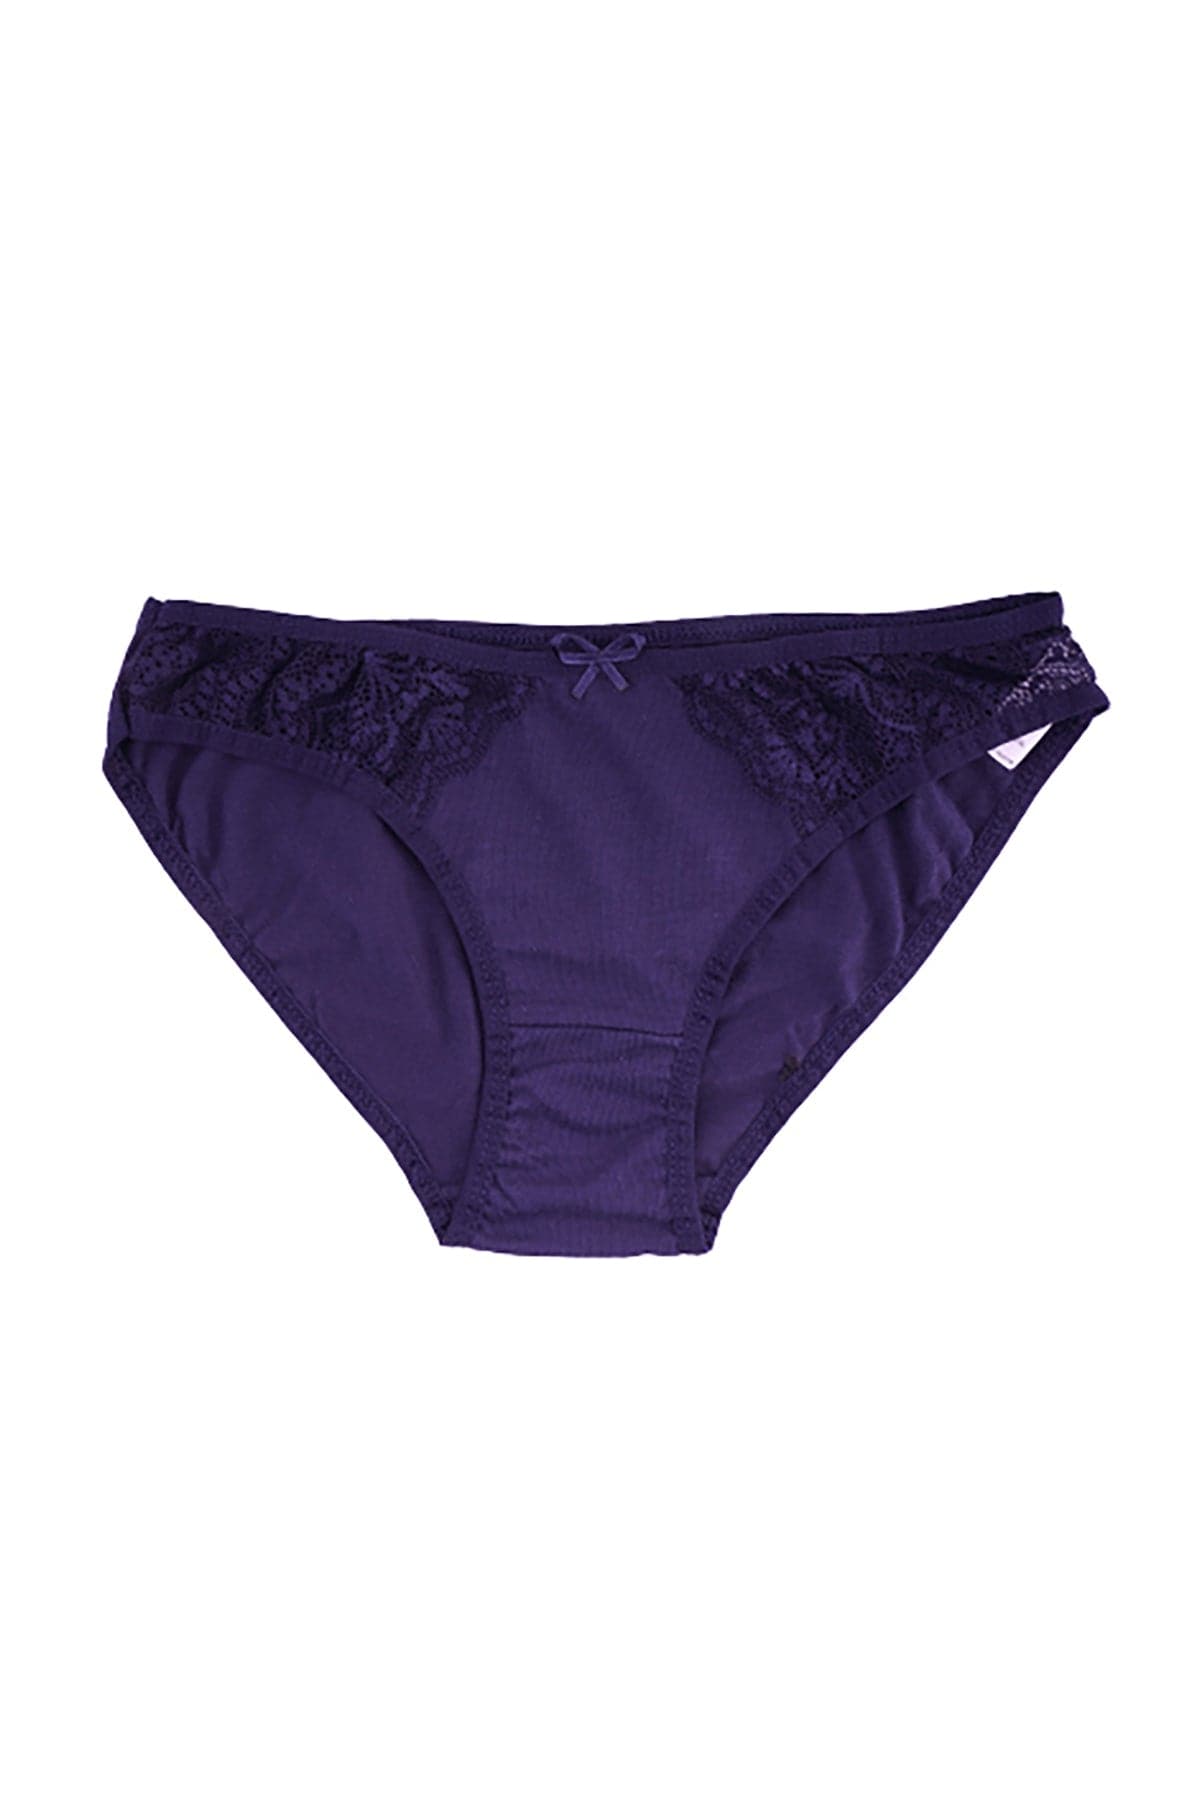 British Lingerie Studio Poppy Cotton Panty - Navy Blue - Premium Panties from BLS - Just Rs 800! Shop now at Cozmetica